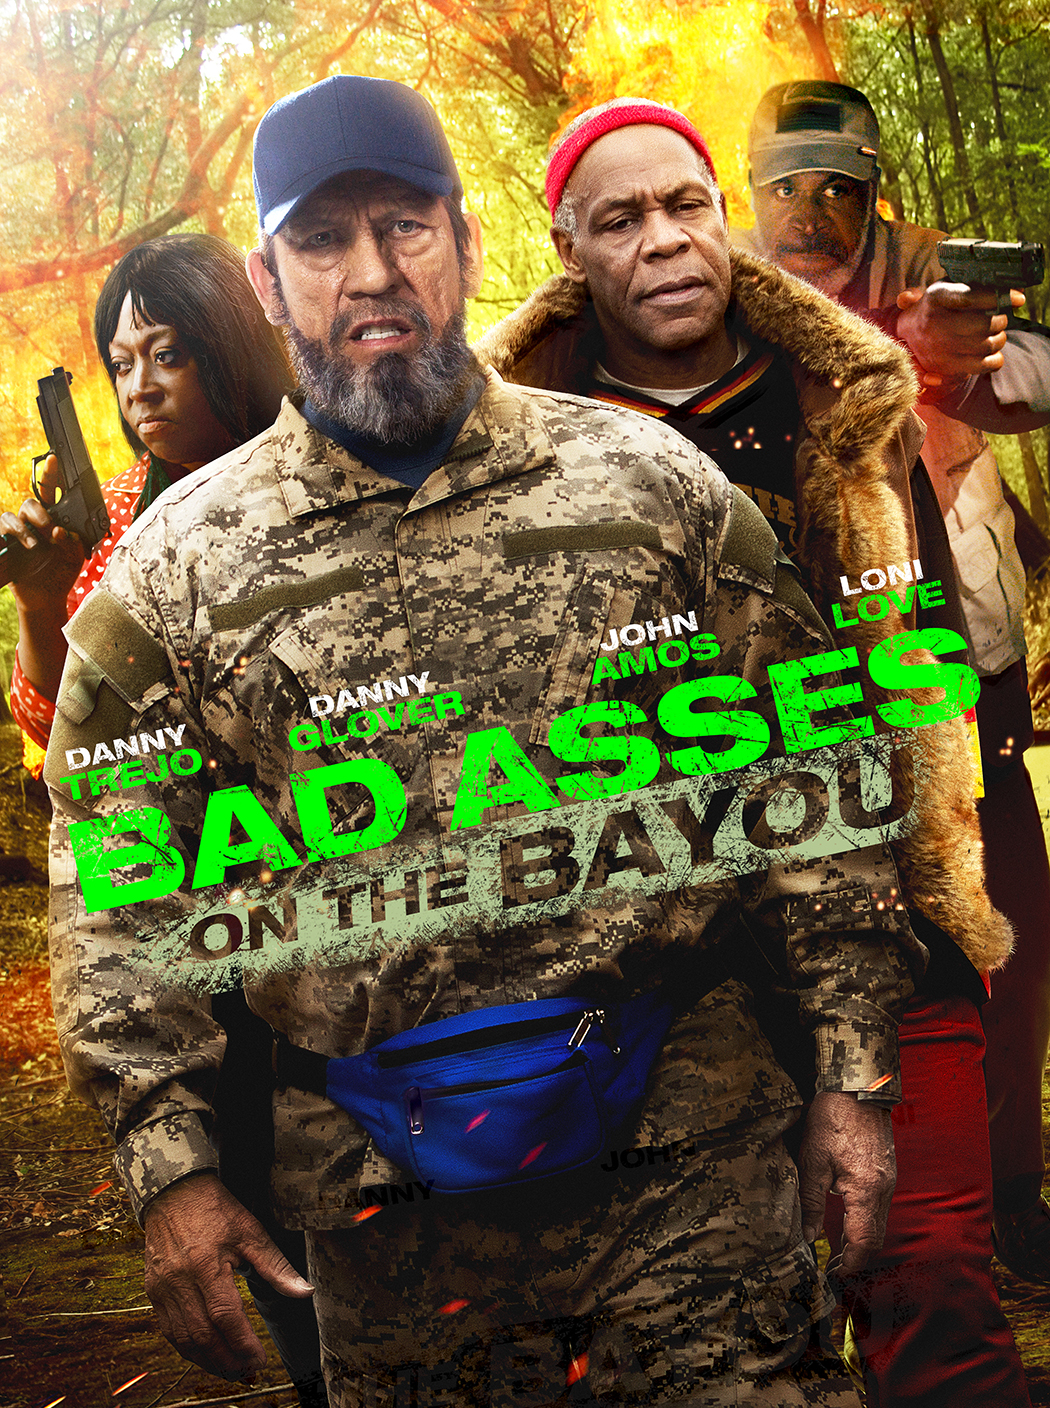 Danny Glover, Danny Trejo, John Amos and Loni Love in Bad Asses on the Bayou (2015)